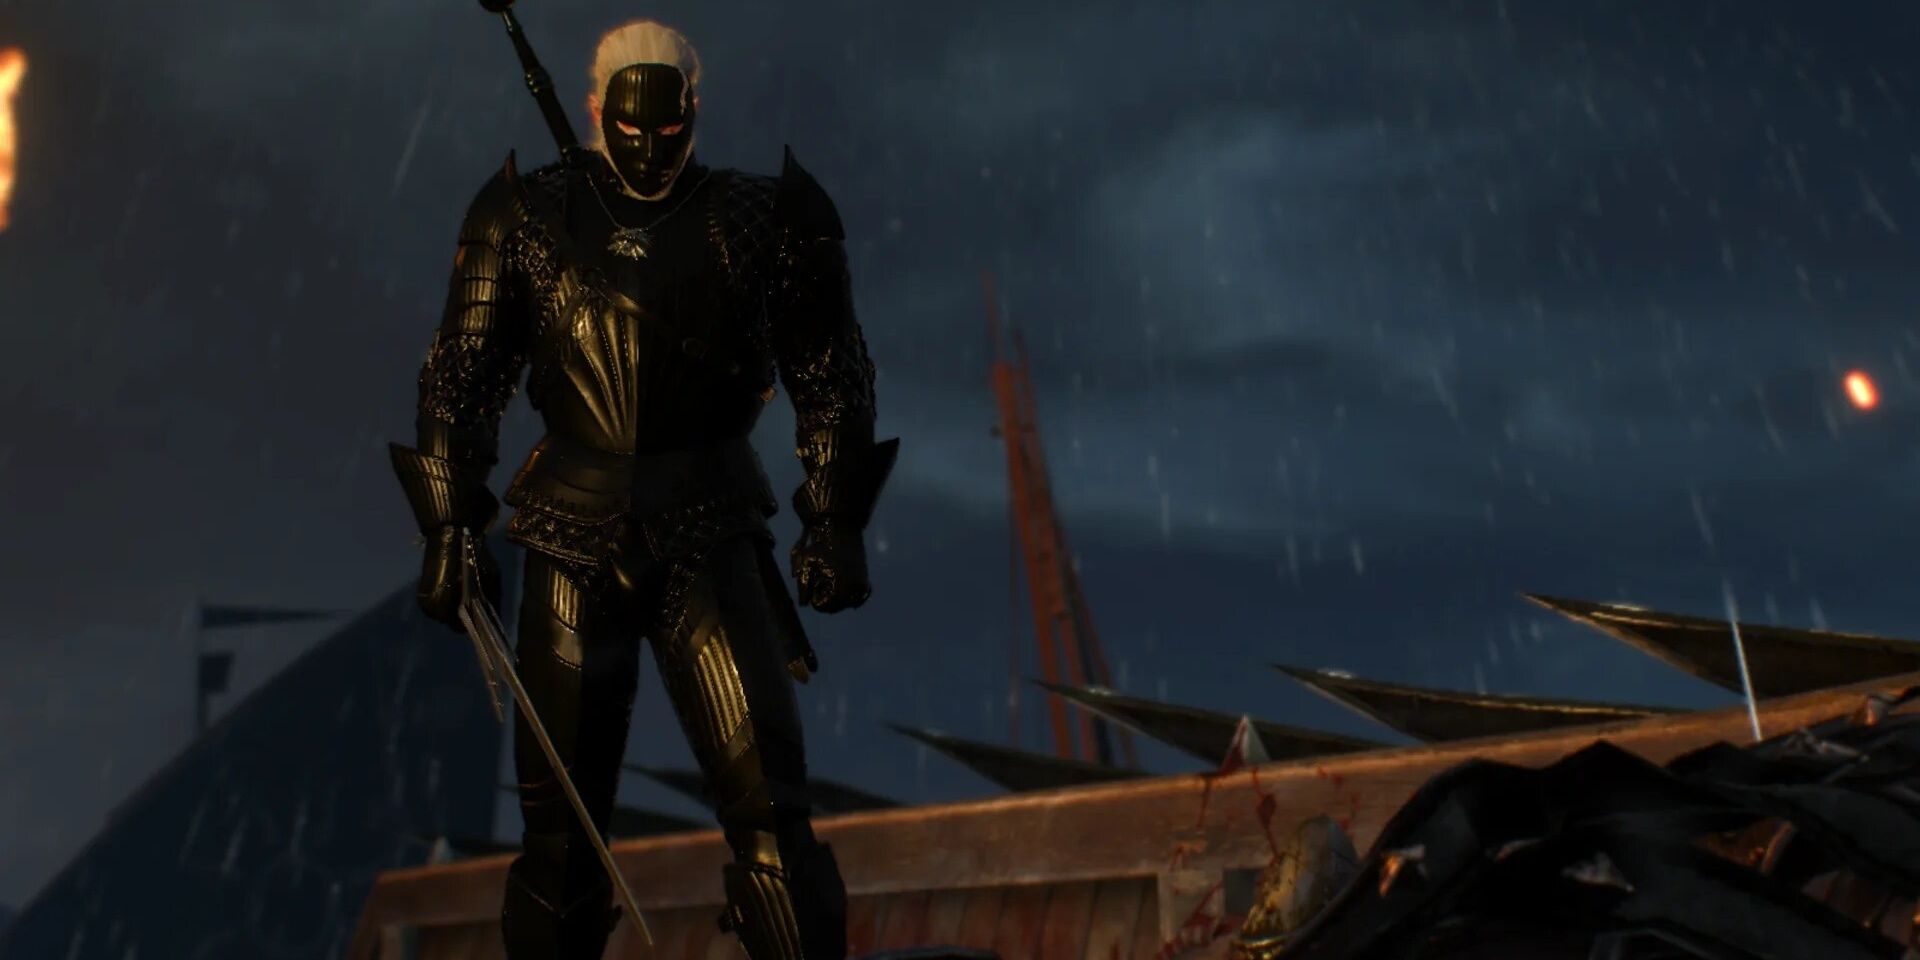 The Witcher 3 Tesham Mutna armor